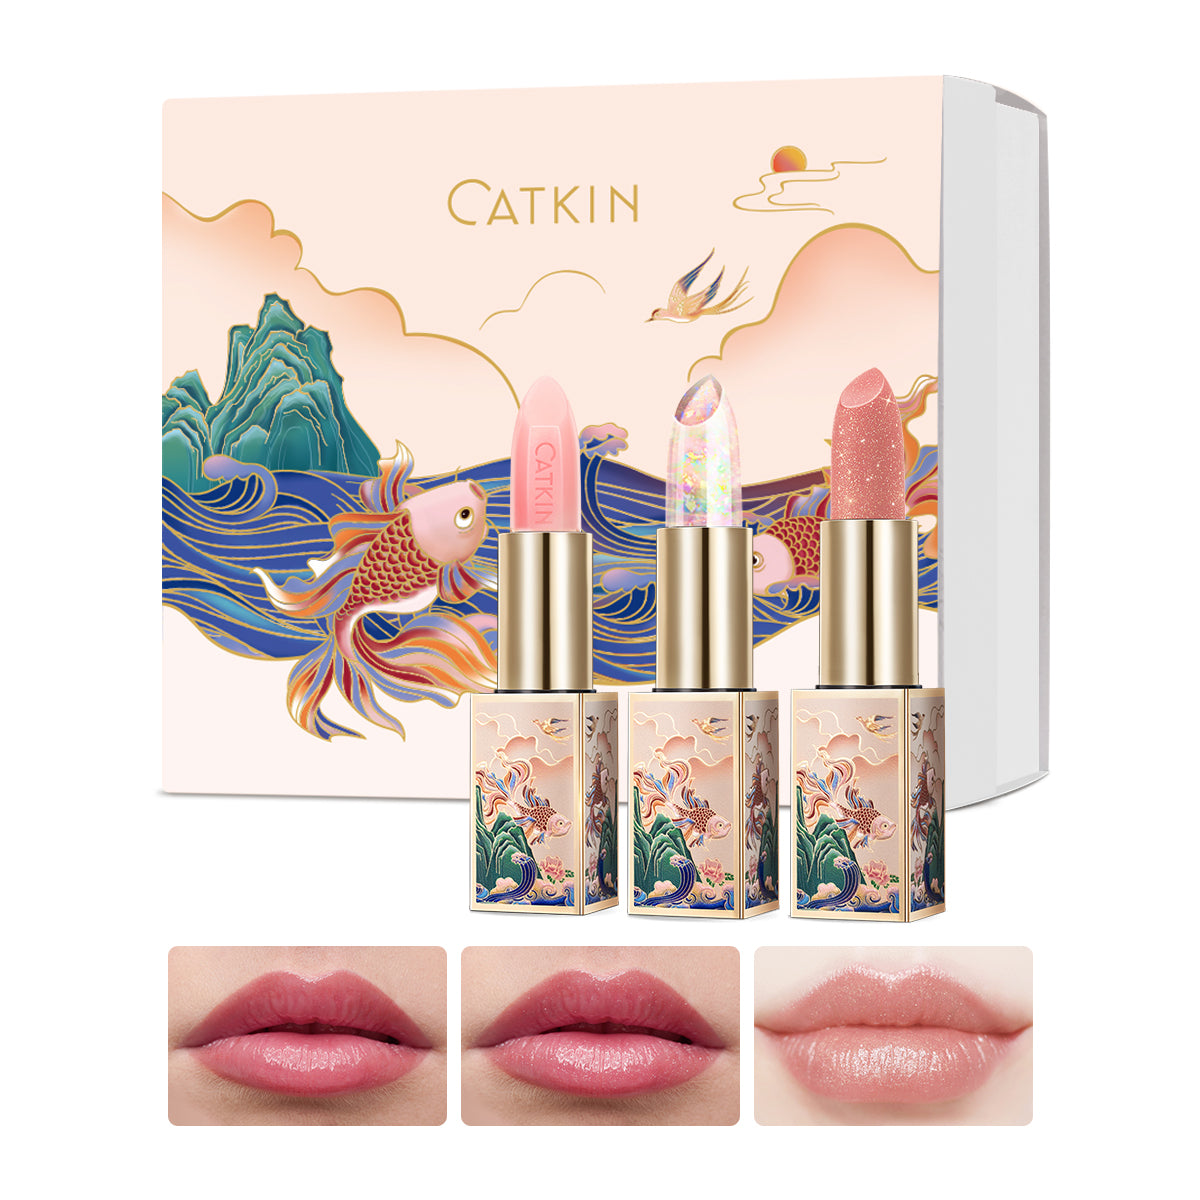 CATKIN Lip Care Gift Set 3pcs Lip Balms Set